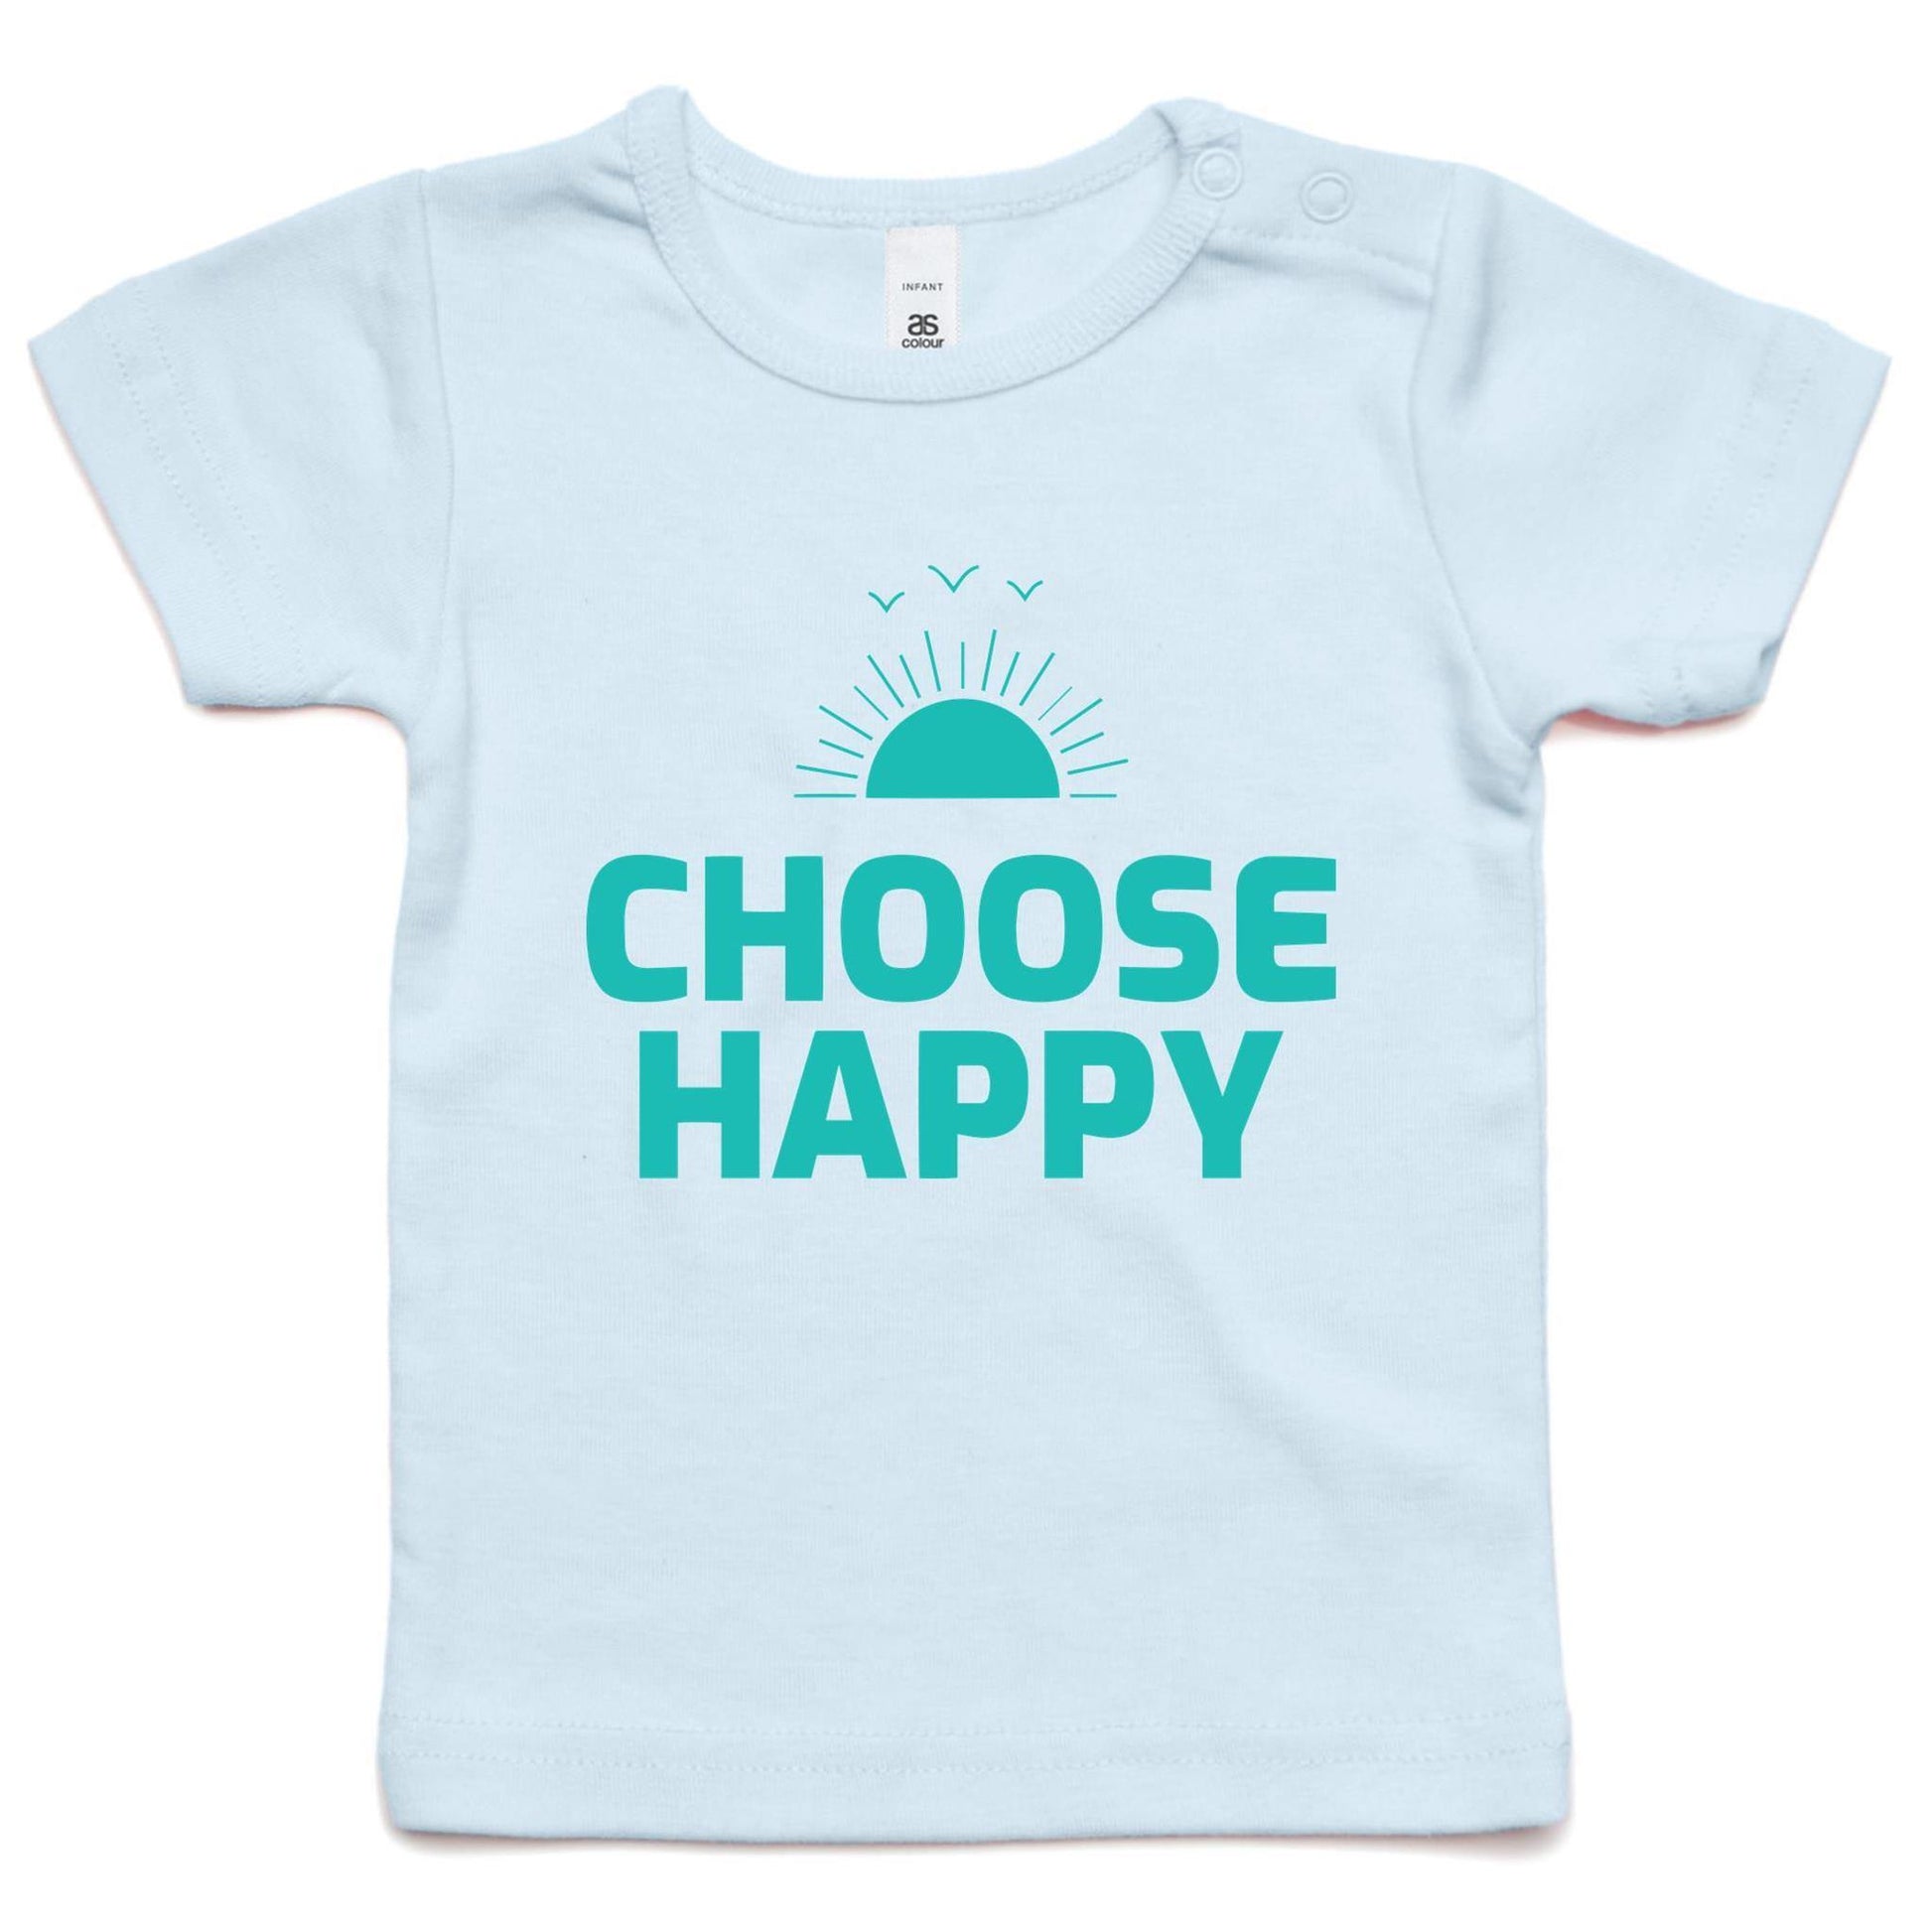 Choose Happy - Baby T-shirt Powder Blue Baby T-shirt kids